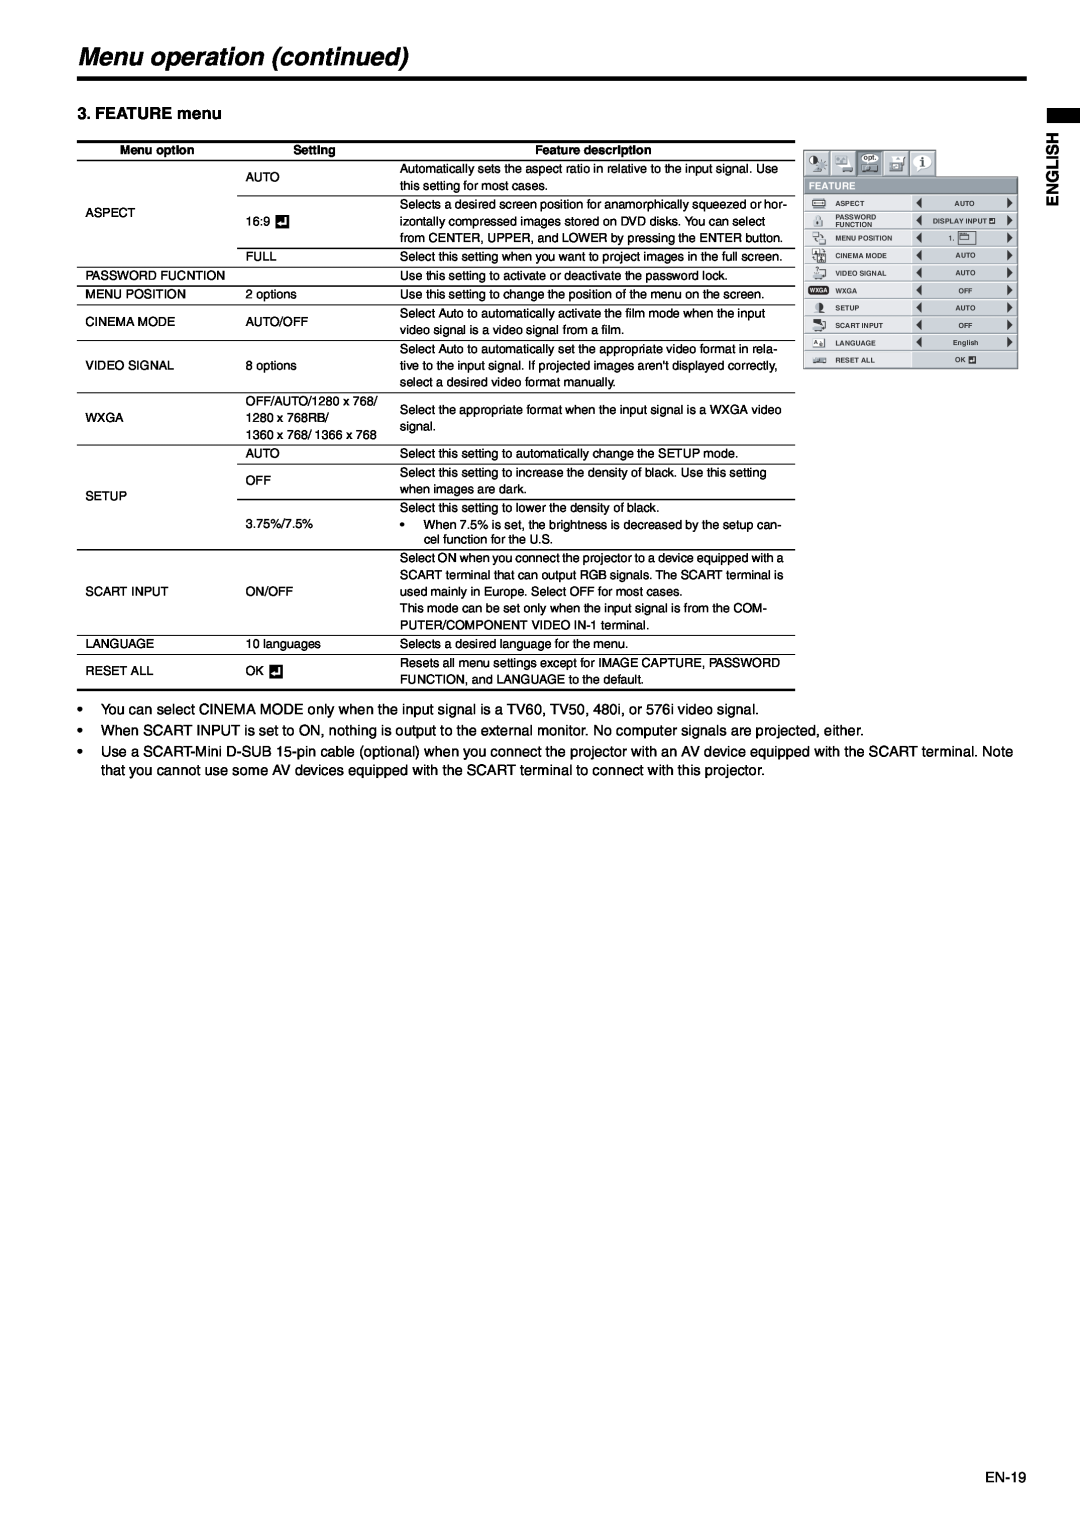 Mitsubishi Electronics XD500U-ST user manual FEATURE menu, Menu operation continued, English, EN-19 